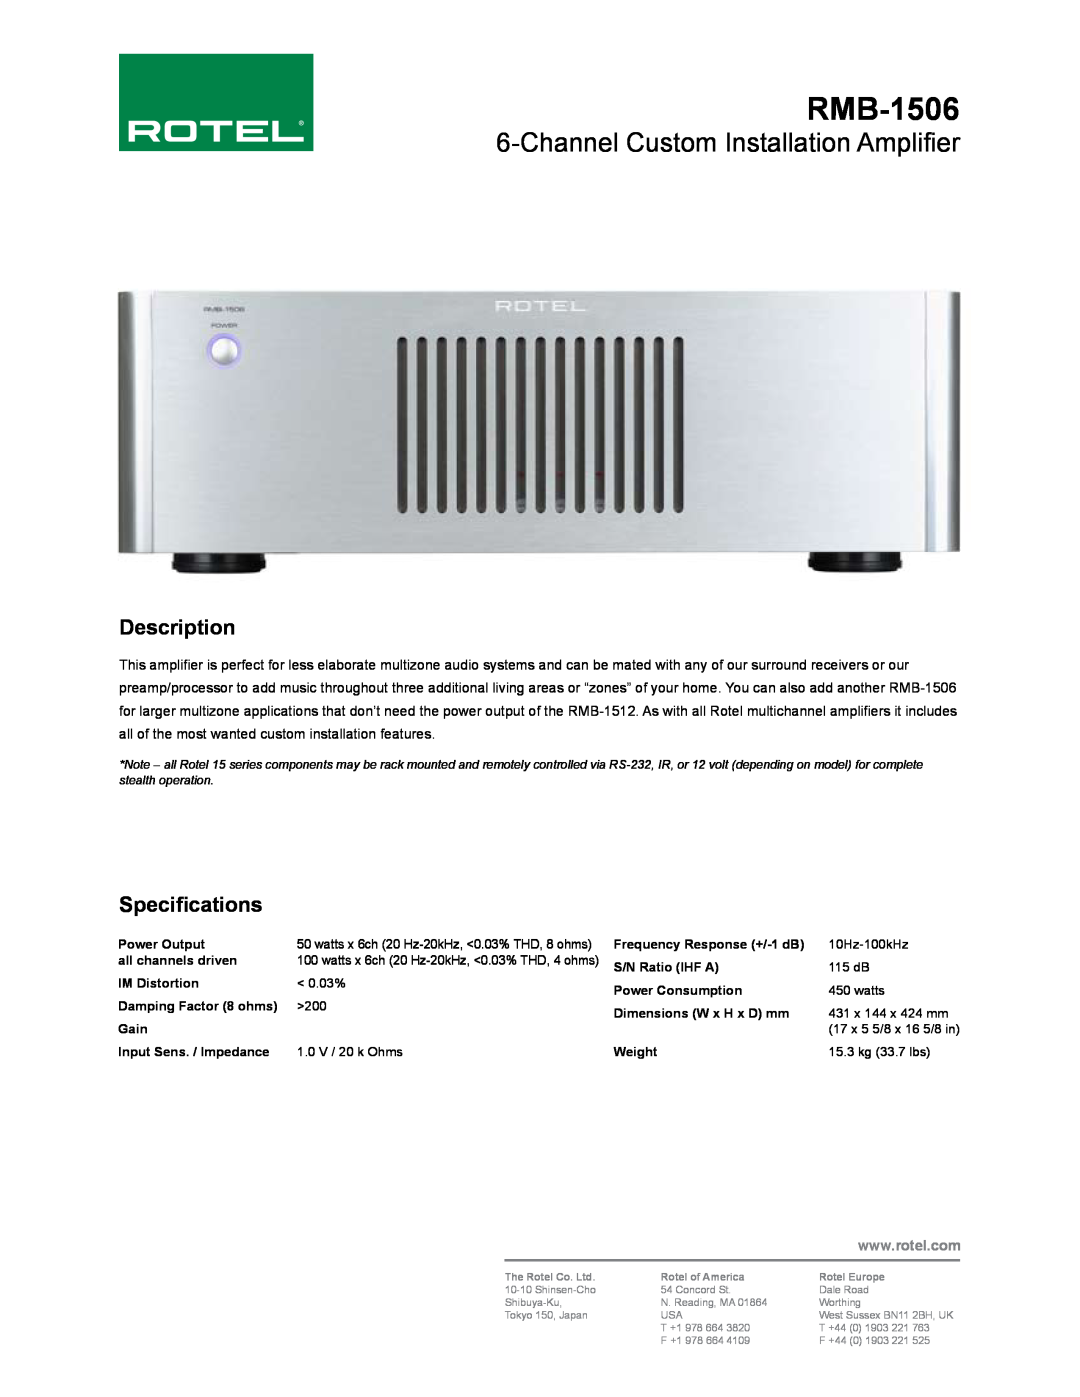 Rotel RMB-1506 dimensions ChannelCustom Installation Amplifier, Description, Specifications 